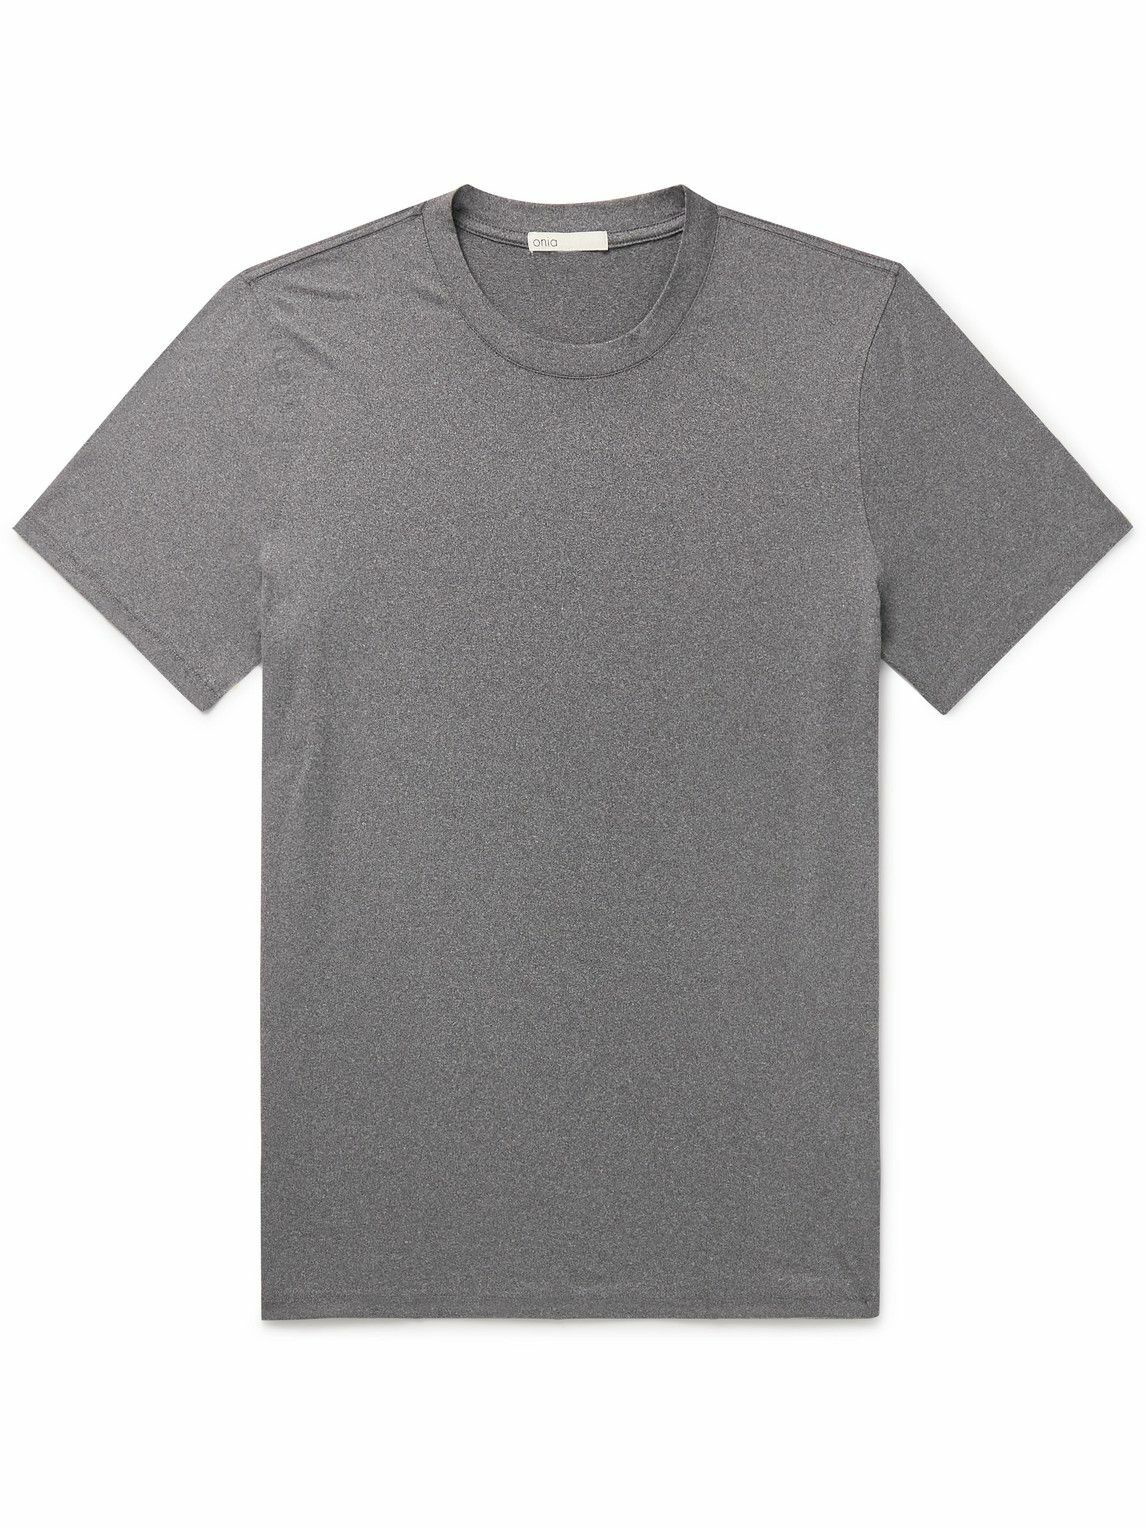 Photo: Onia - Everyday UltraLite Stretch-Jersey T-Shirt - Gray